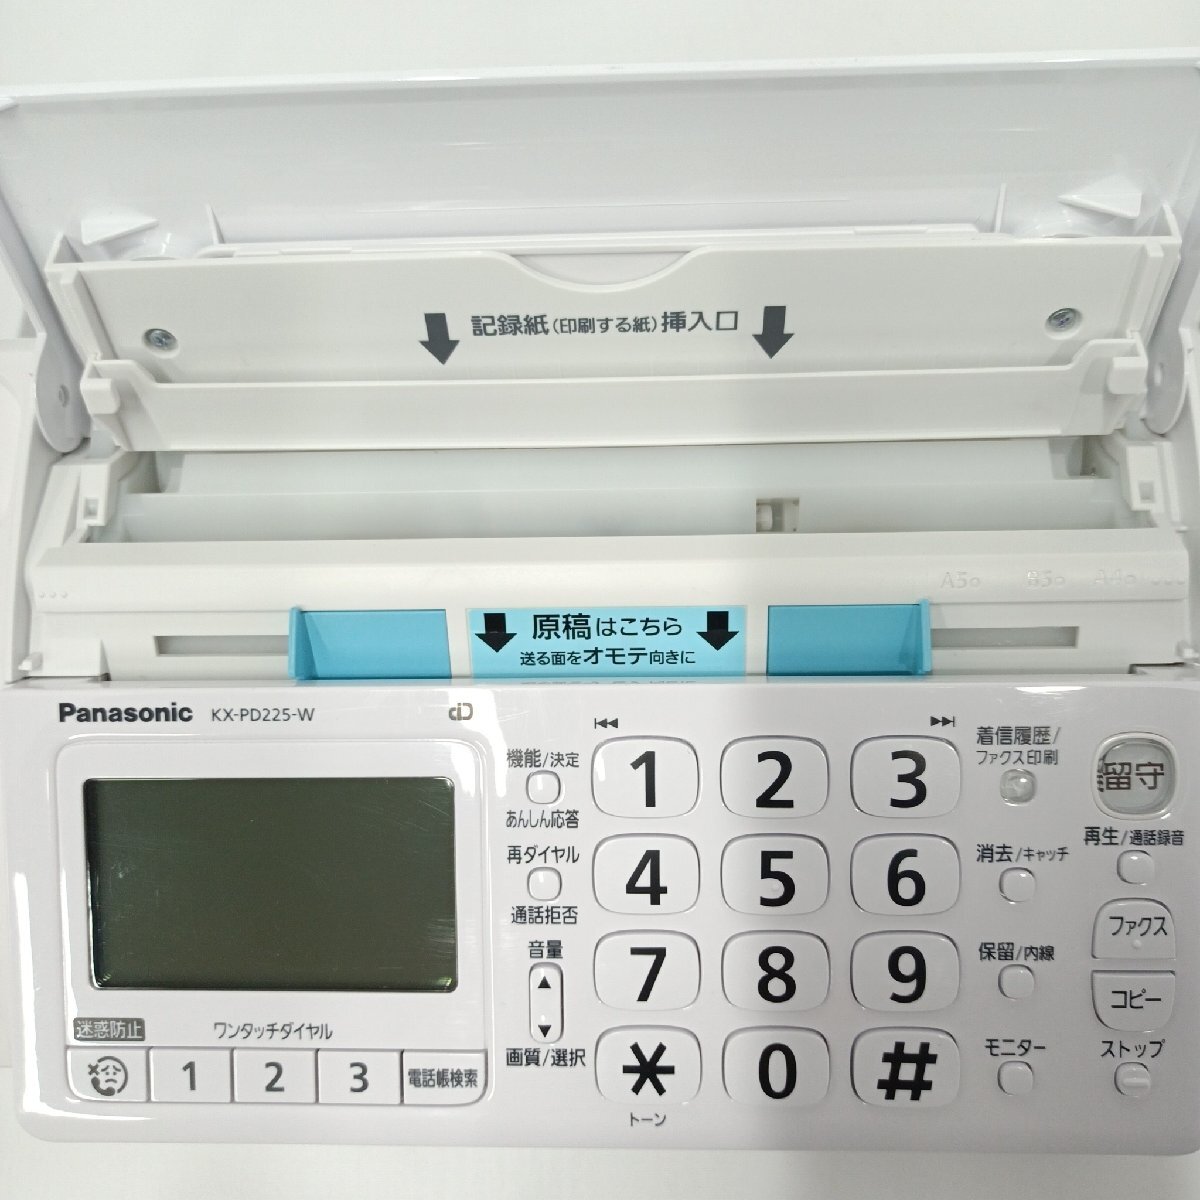 Panasonic Panasonic personal fax .....KX-PD225DL-W cordless handset ×1 white facsimile phone telephone operation verification settled [ road comfort Sapporo ]